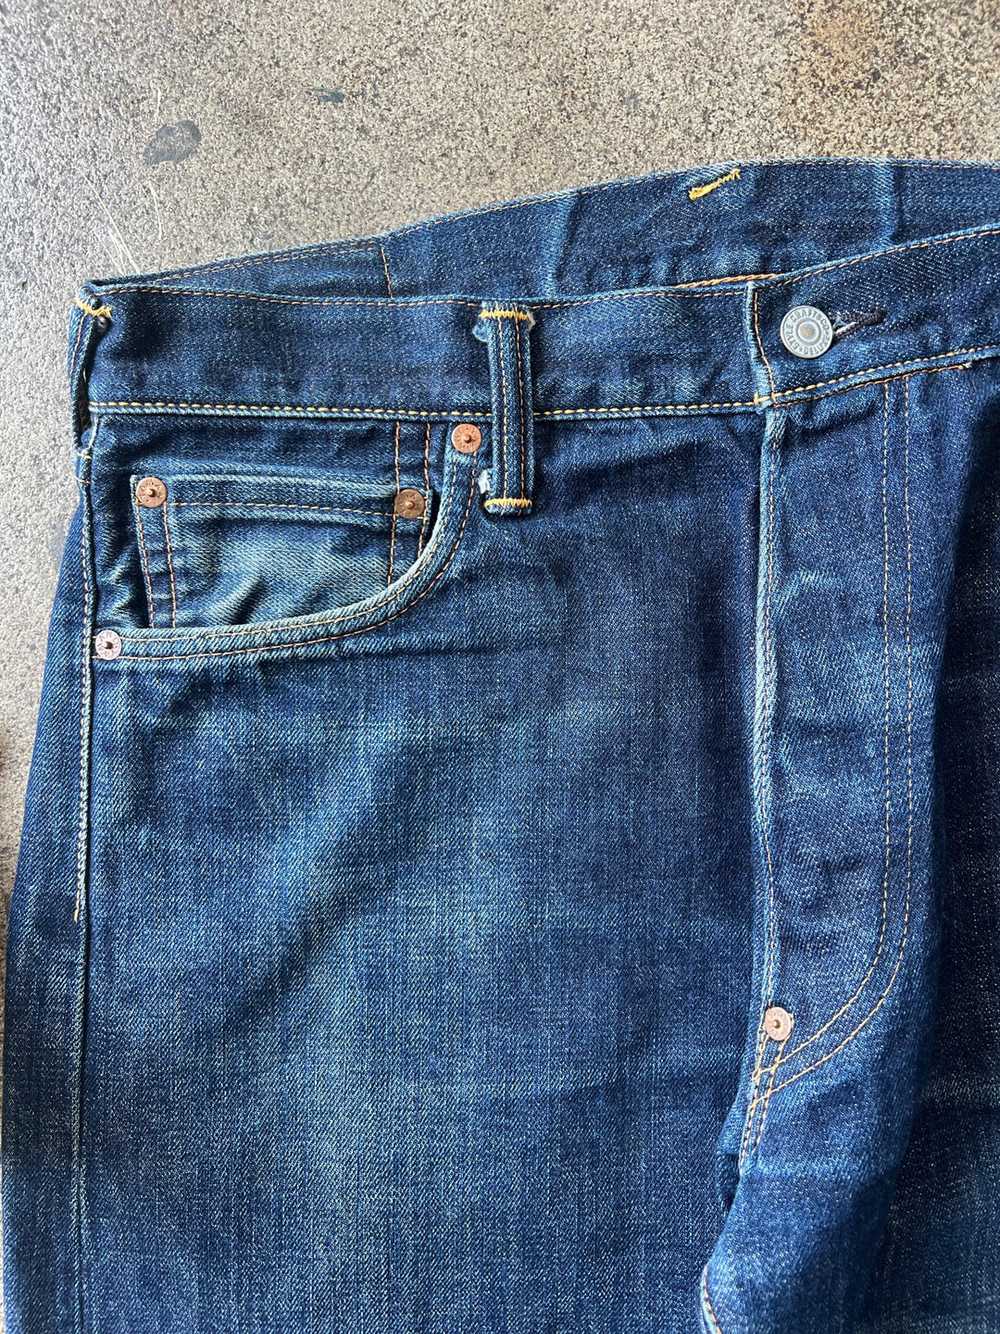 2000s Evisu Daicock Selvedge Jeans 33" x 32" - image 6